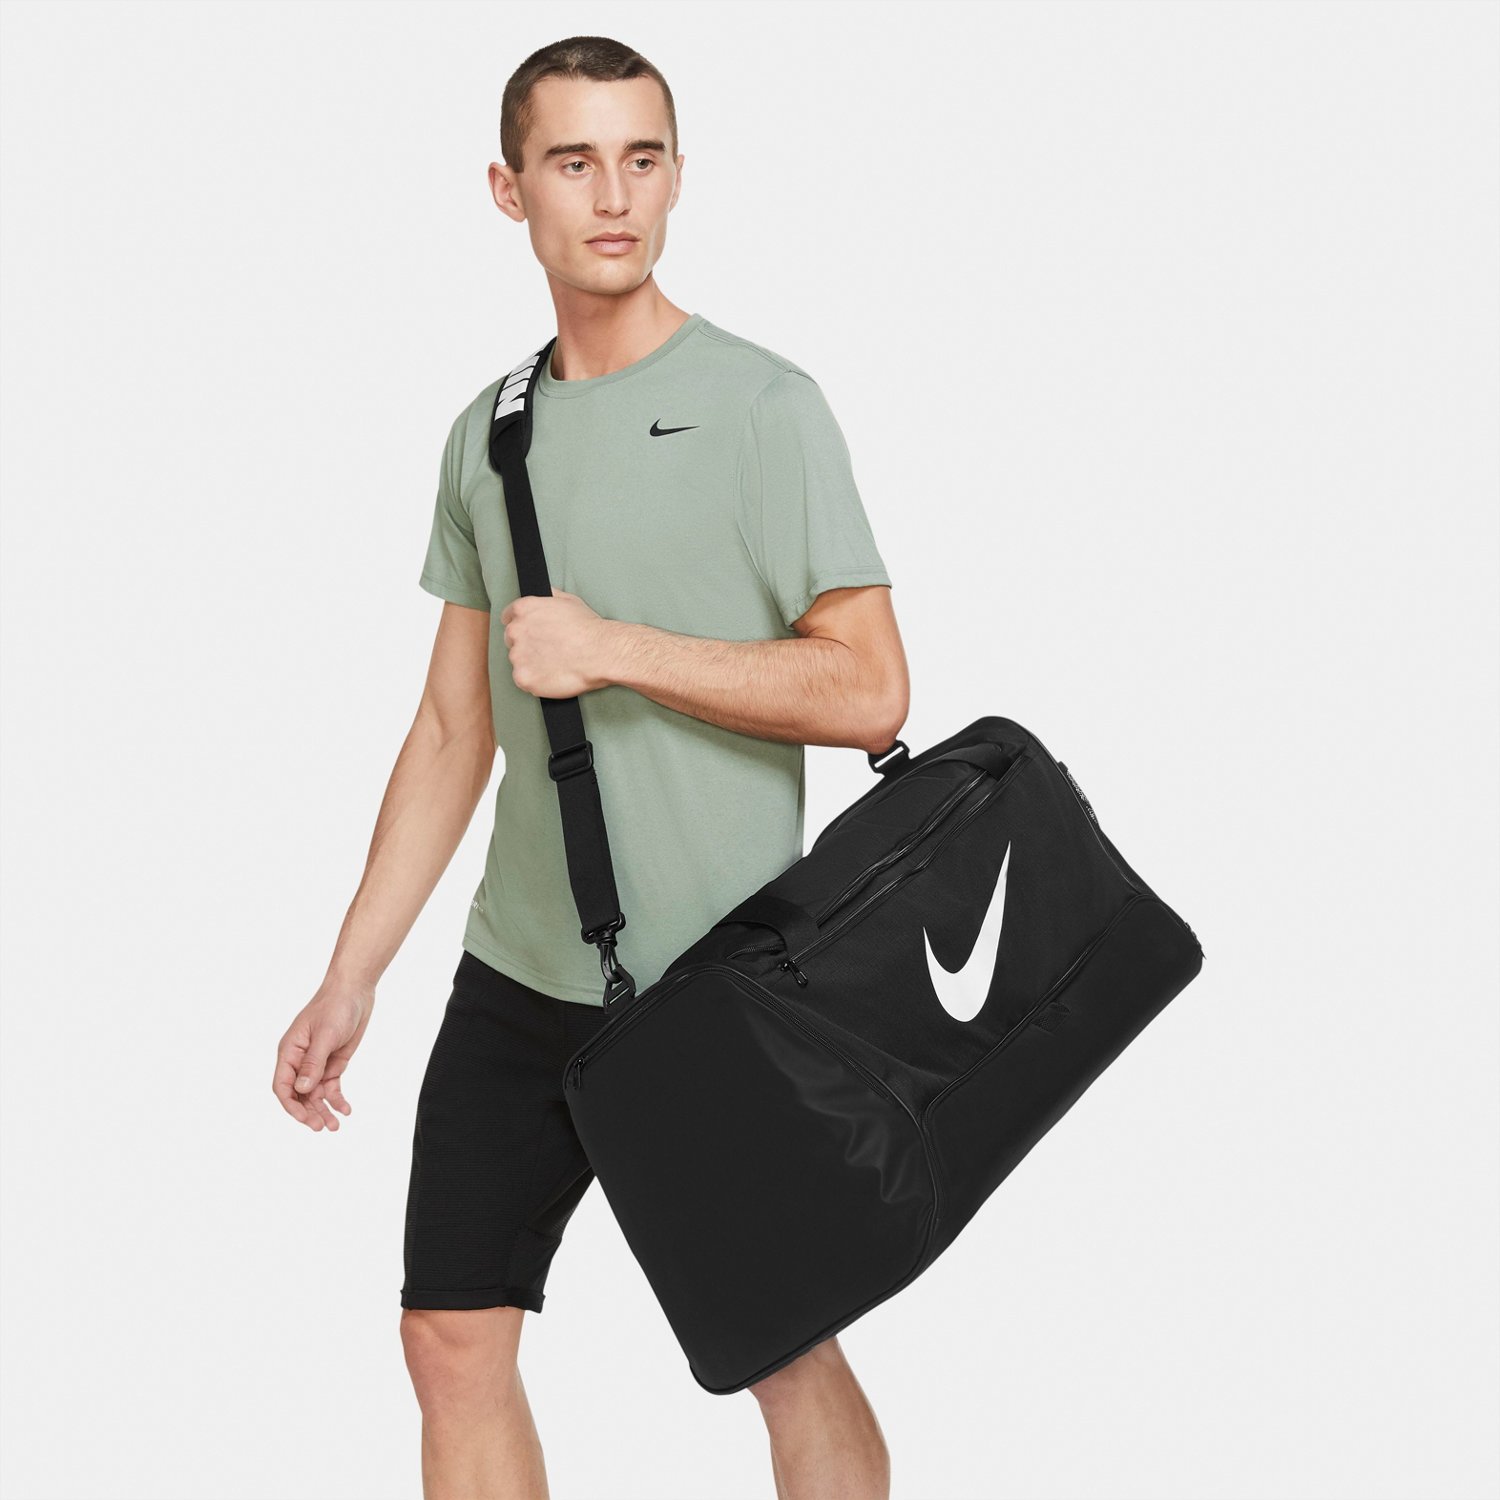 Nike Brasilia (Medium) Training Duffel Bag (University Red/Black/White–